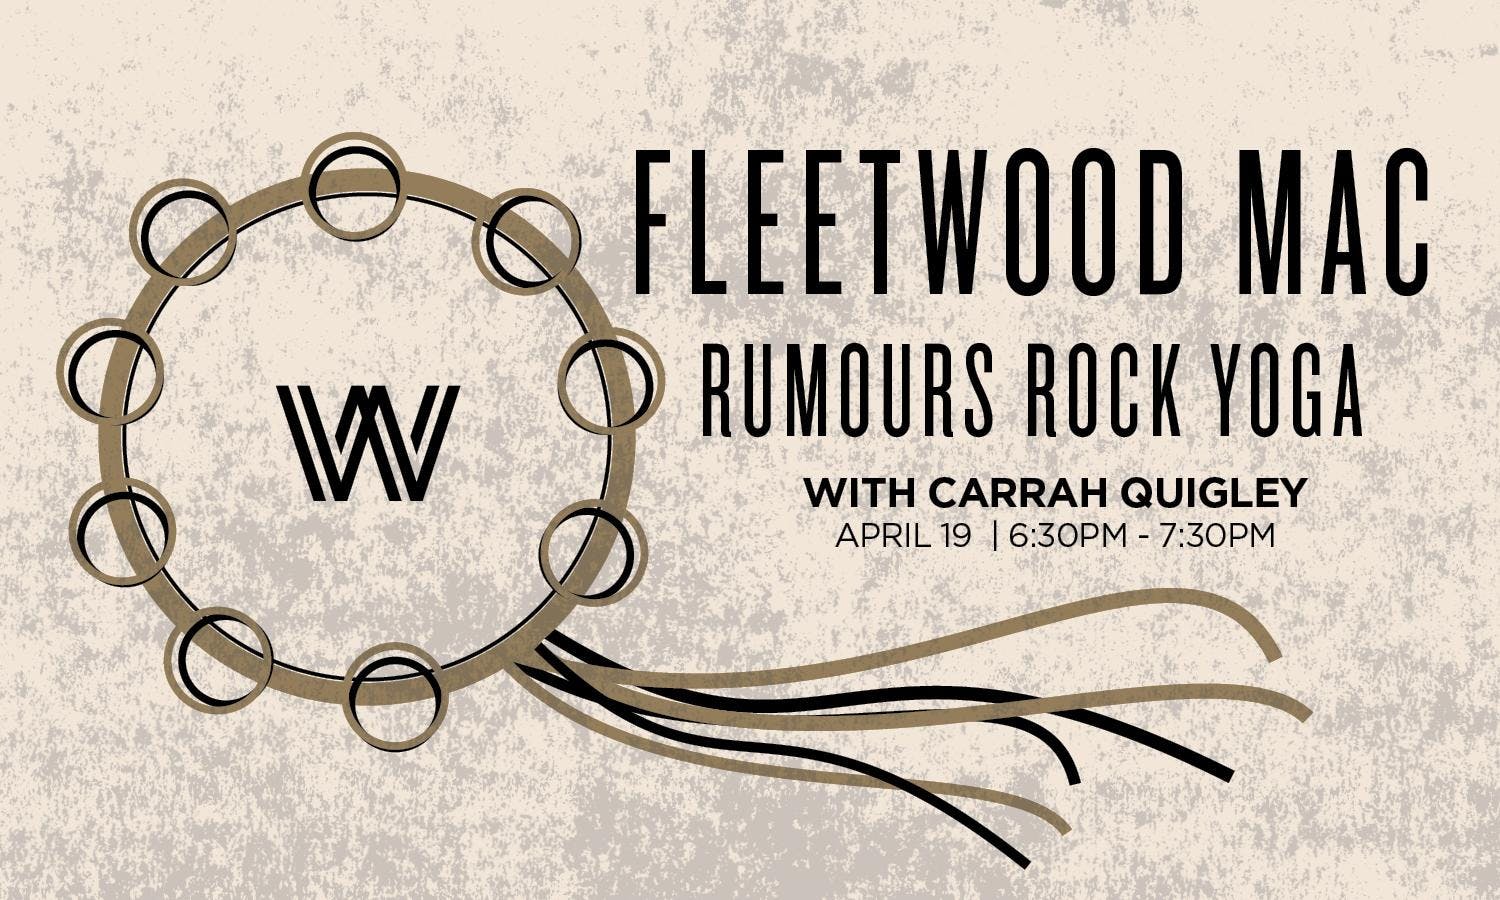 Fleetwood Mac Rock Yoga at Woodside